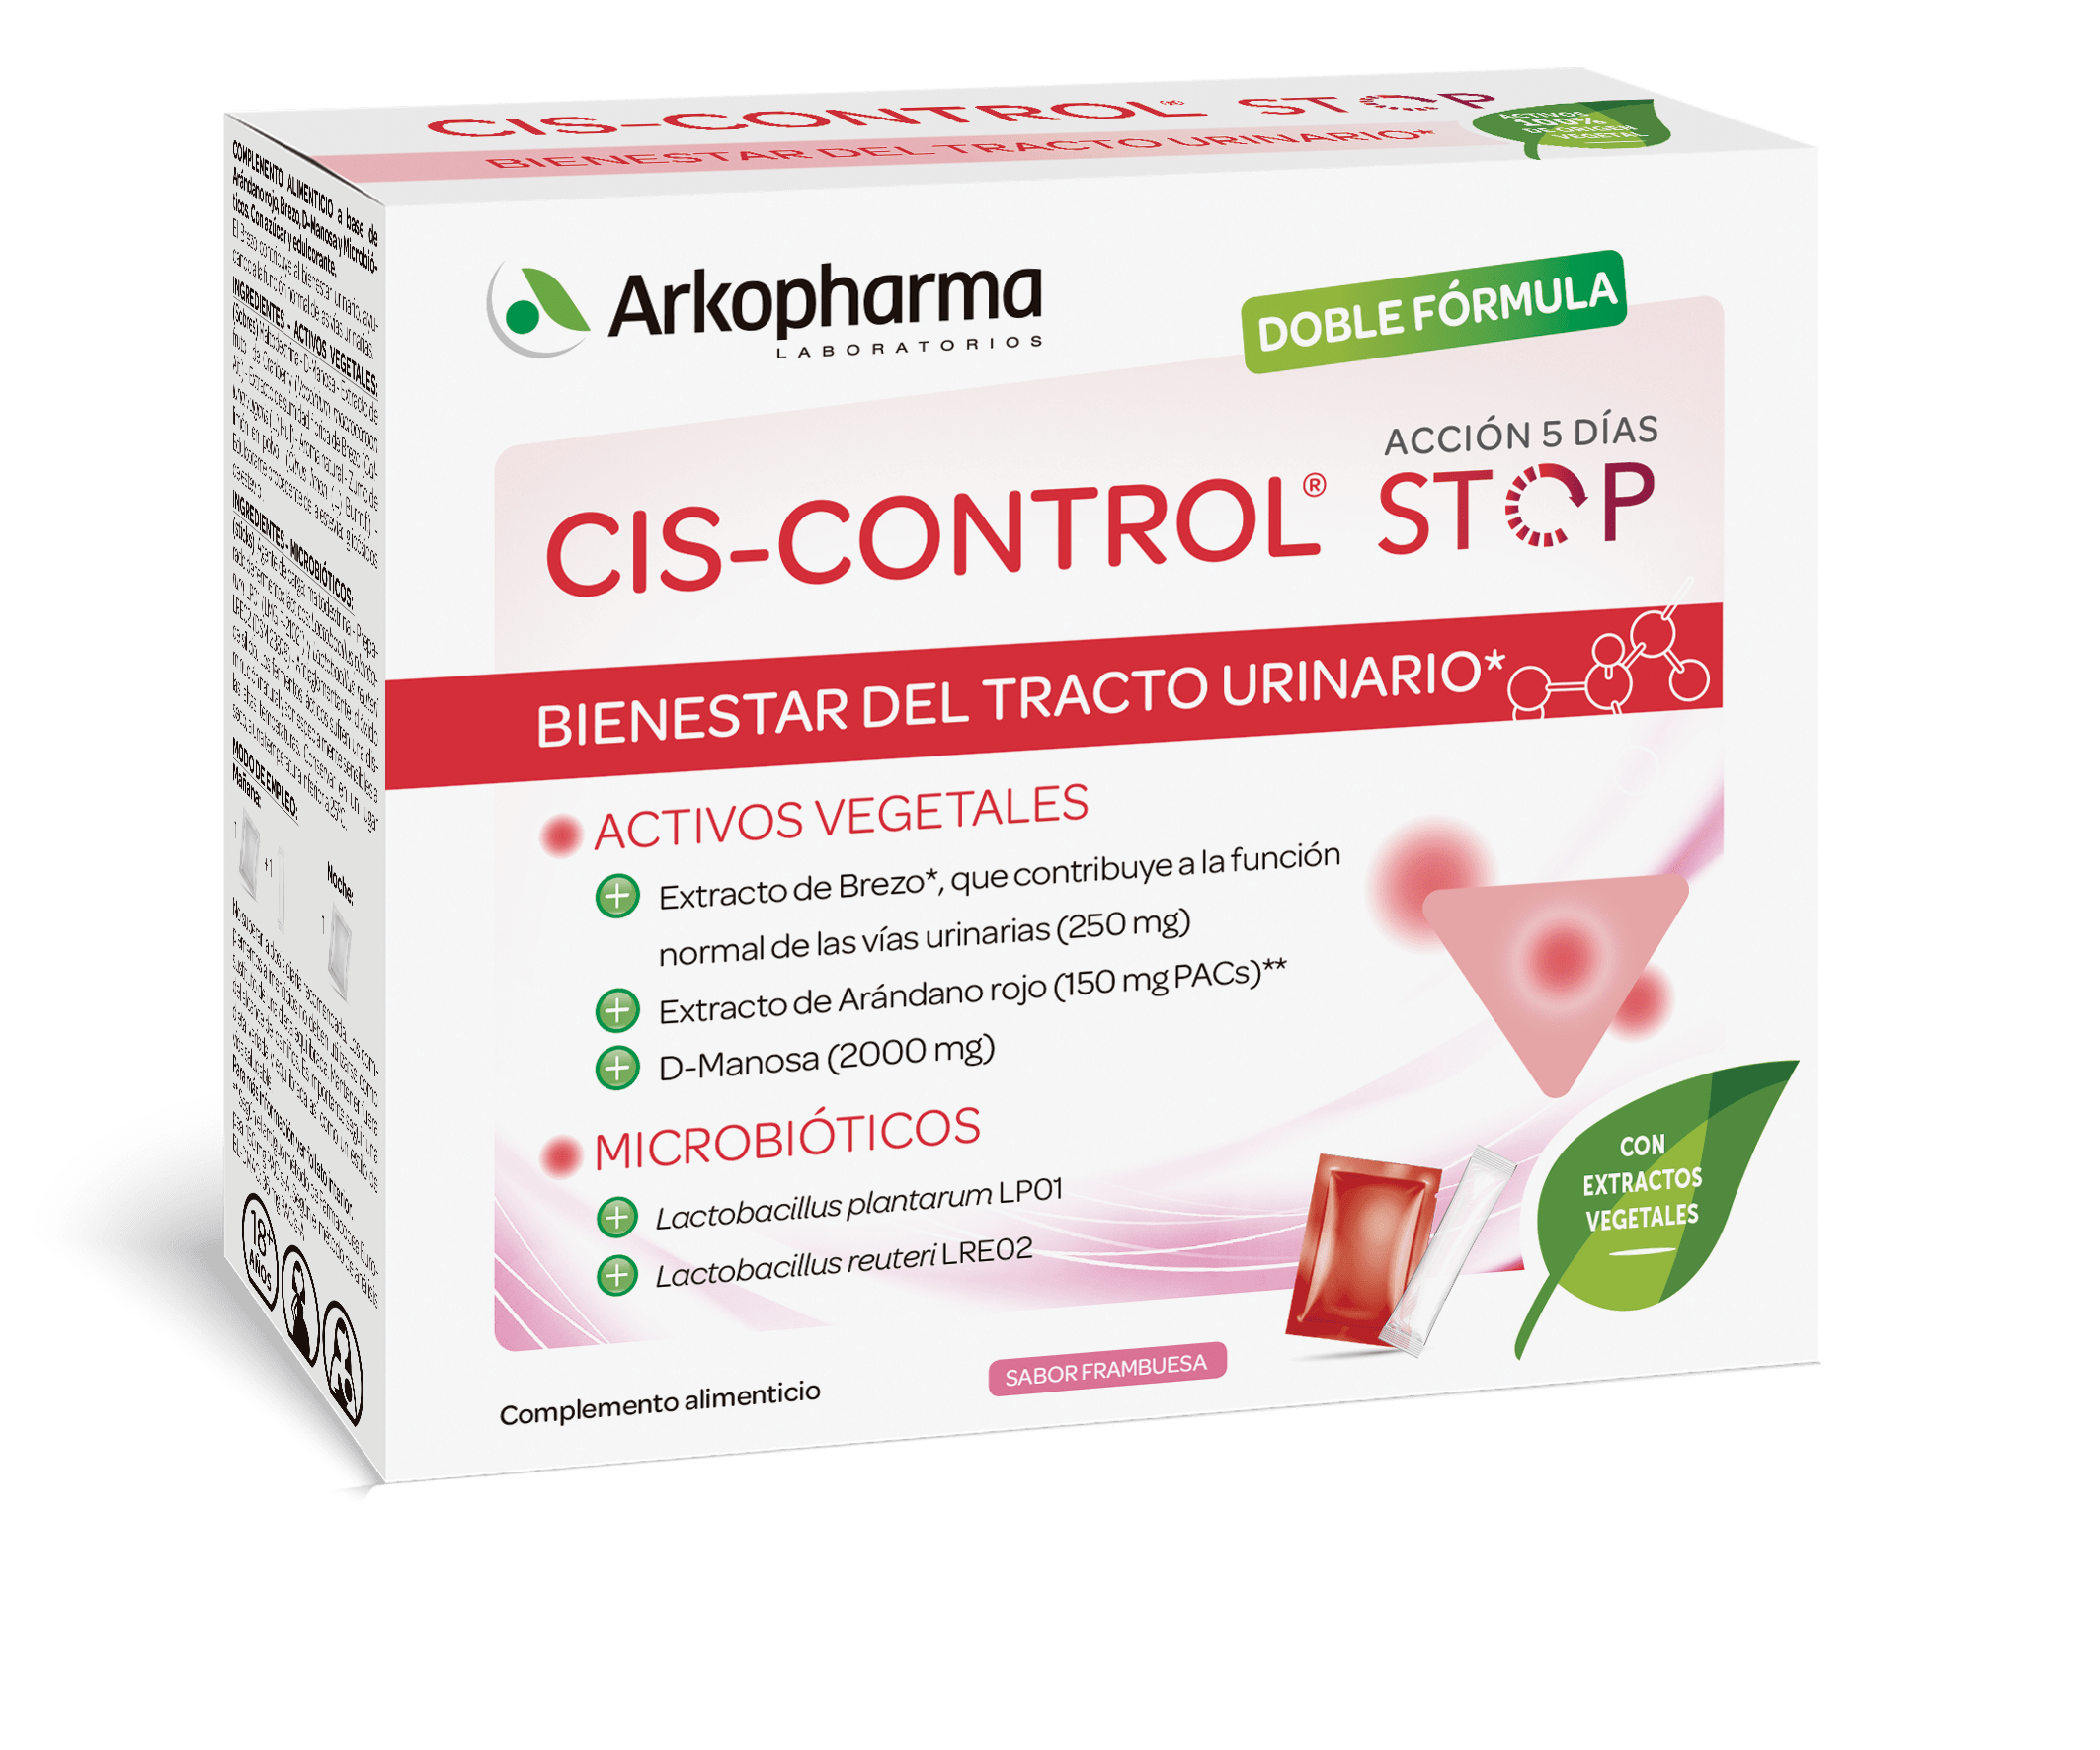 Cis-Control® Stop